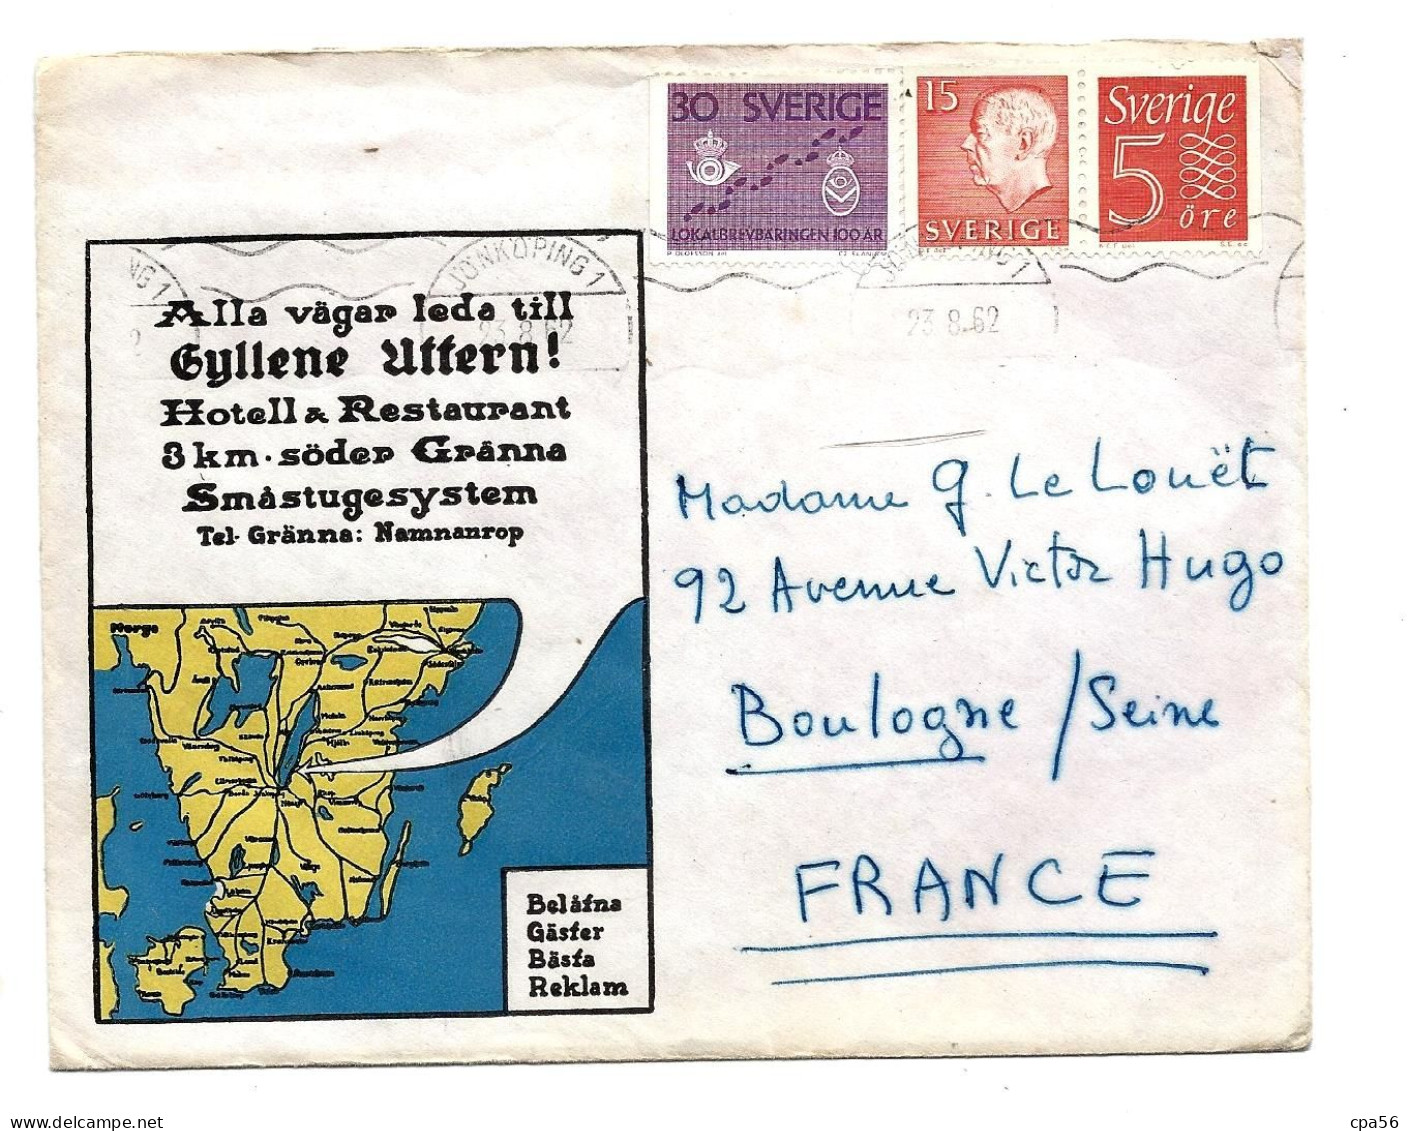 SVERIGE - SUEDE - SWEDEN - Letter 1962 - 3 Stamps - Hotell Restaurant GYLLENE UTTERN - Storia Postale